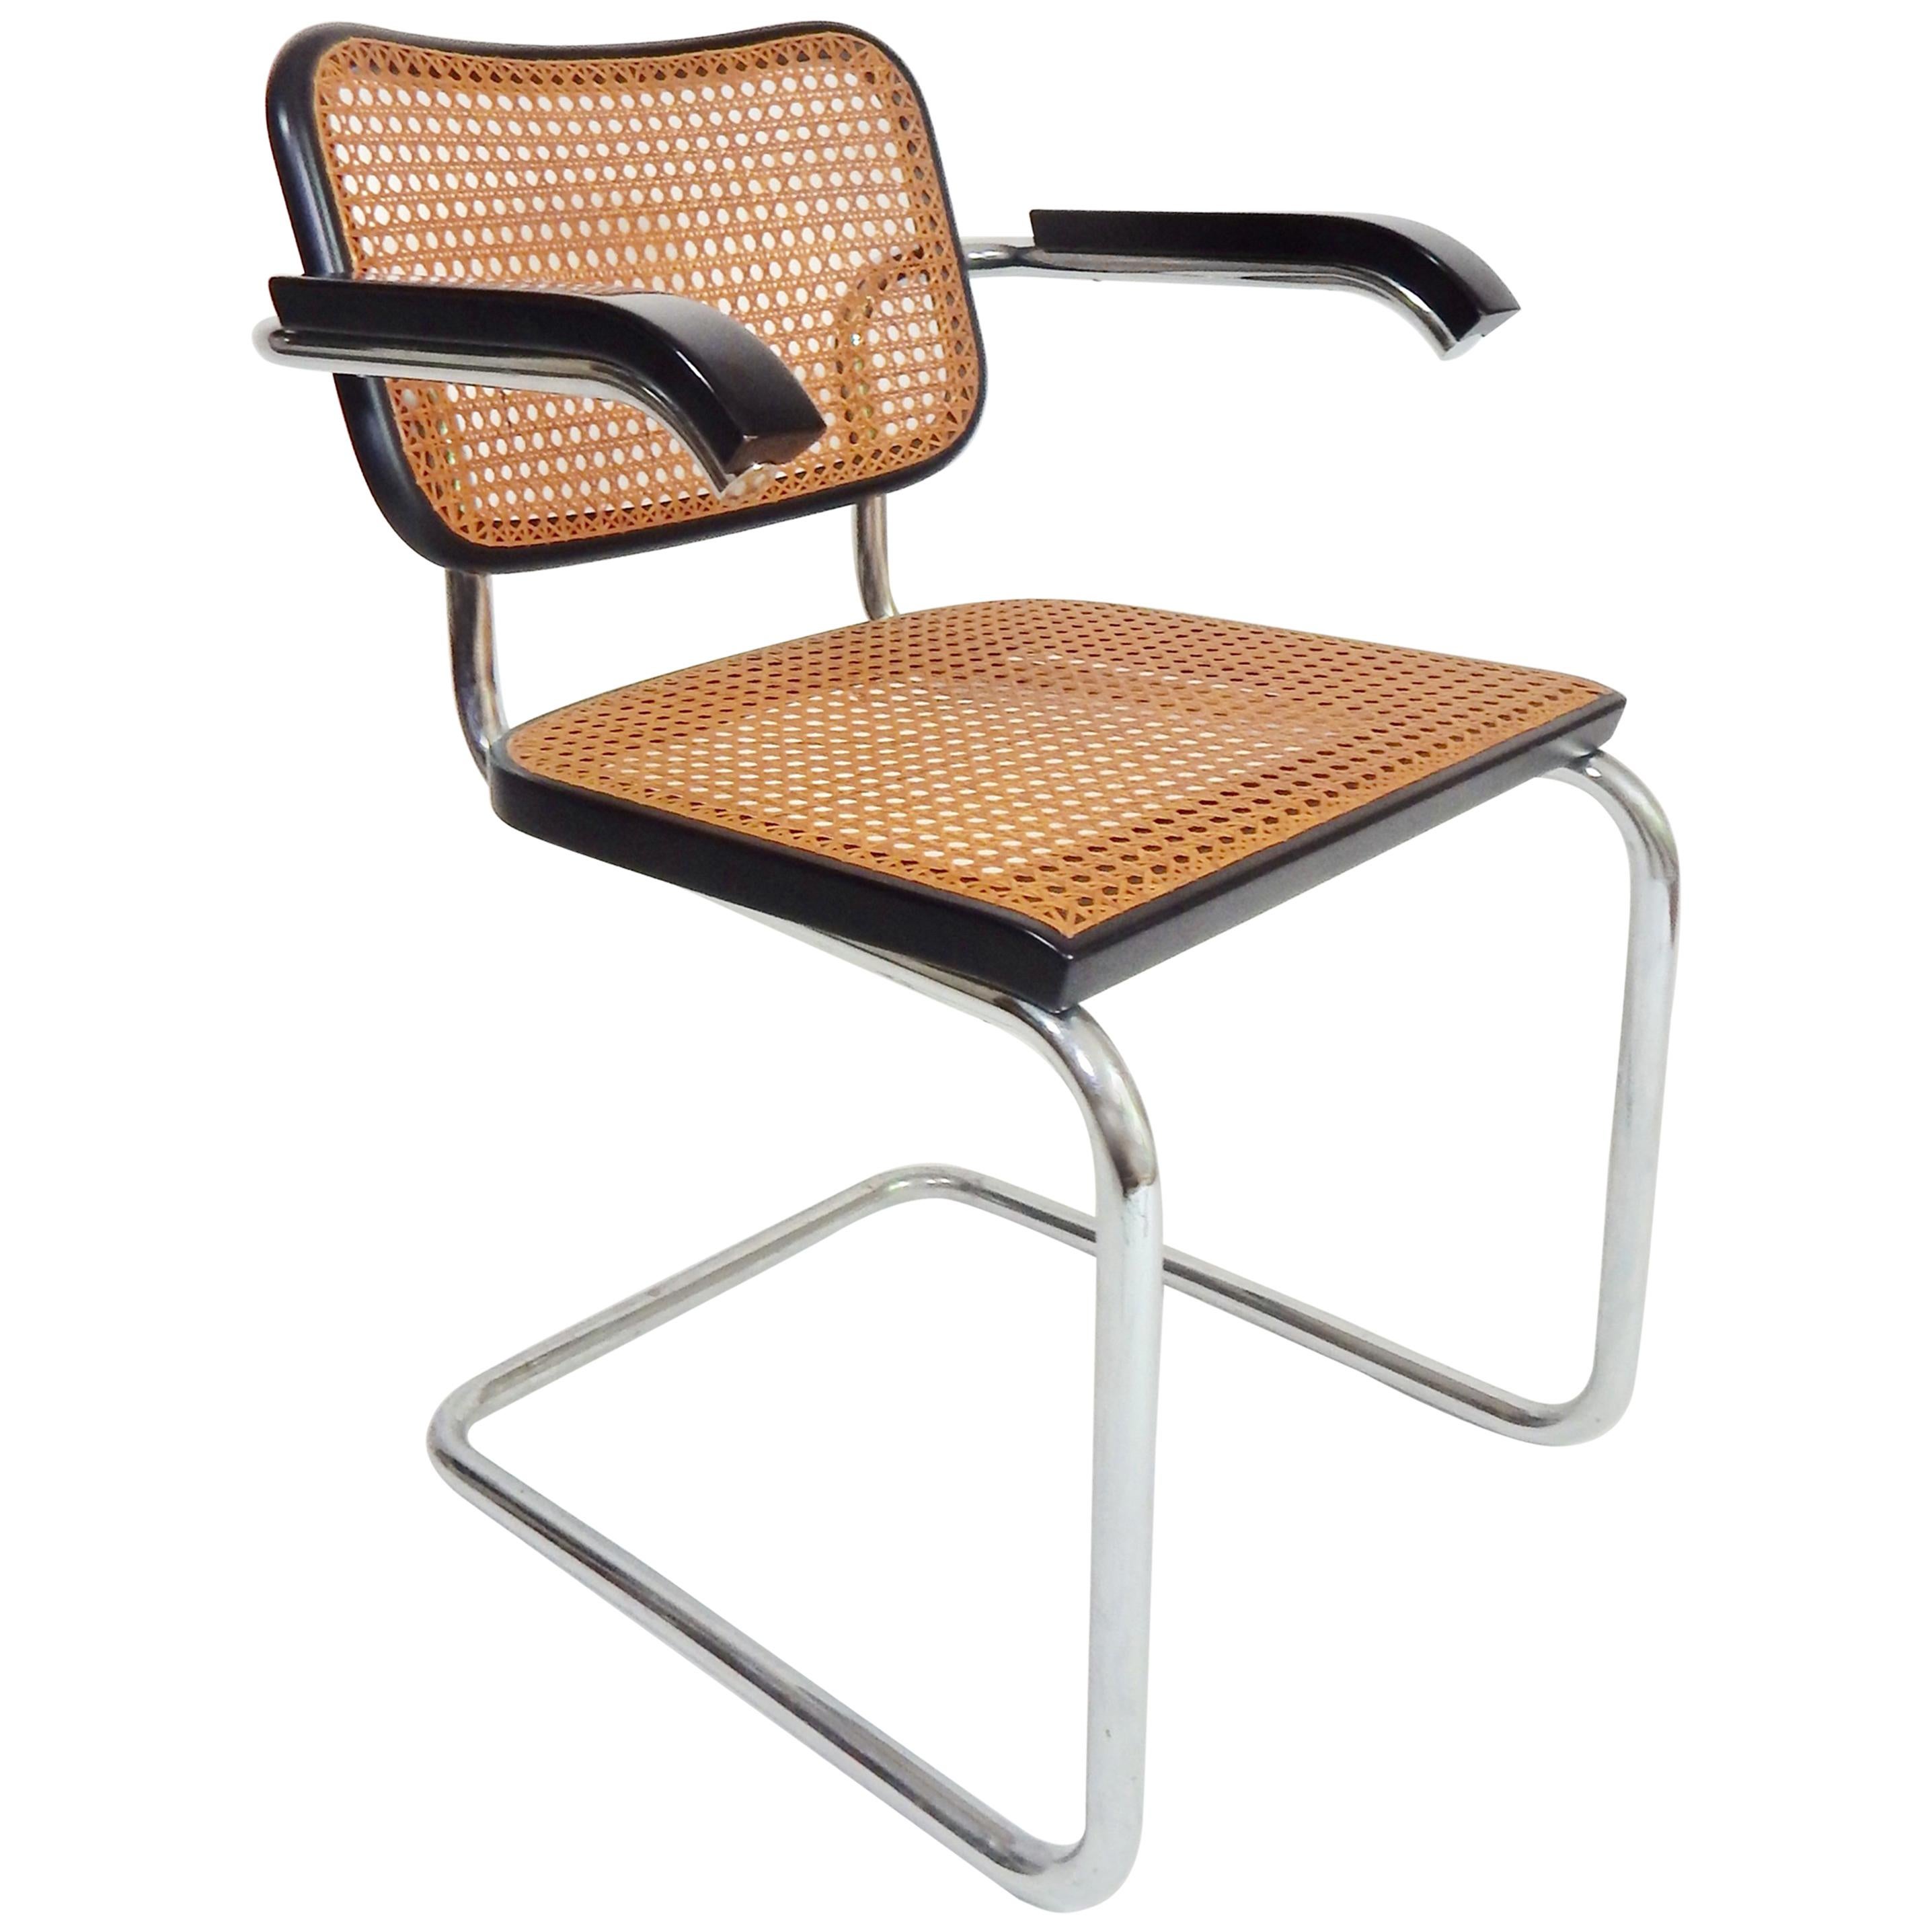 1970s Black Marcel Breuer Knoll Cesca Cane Chairs